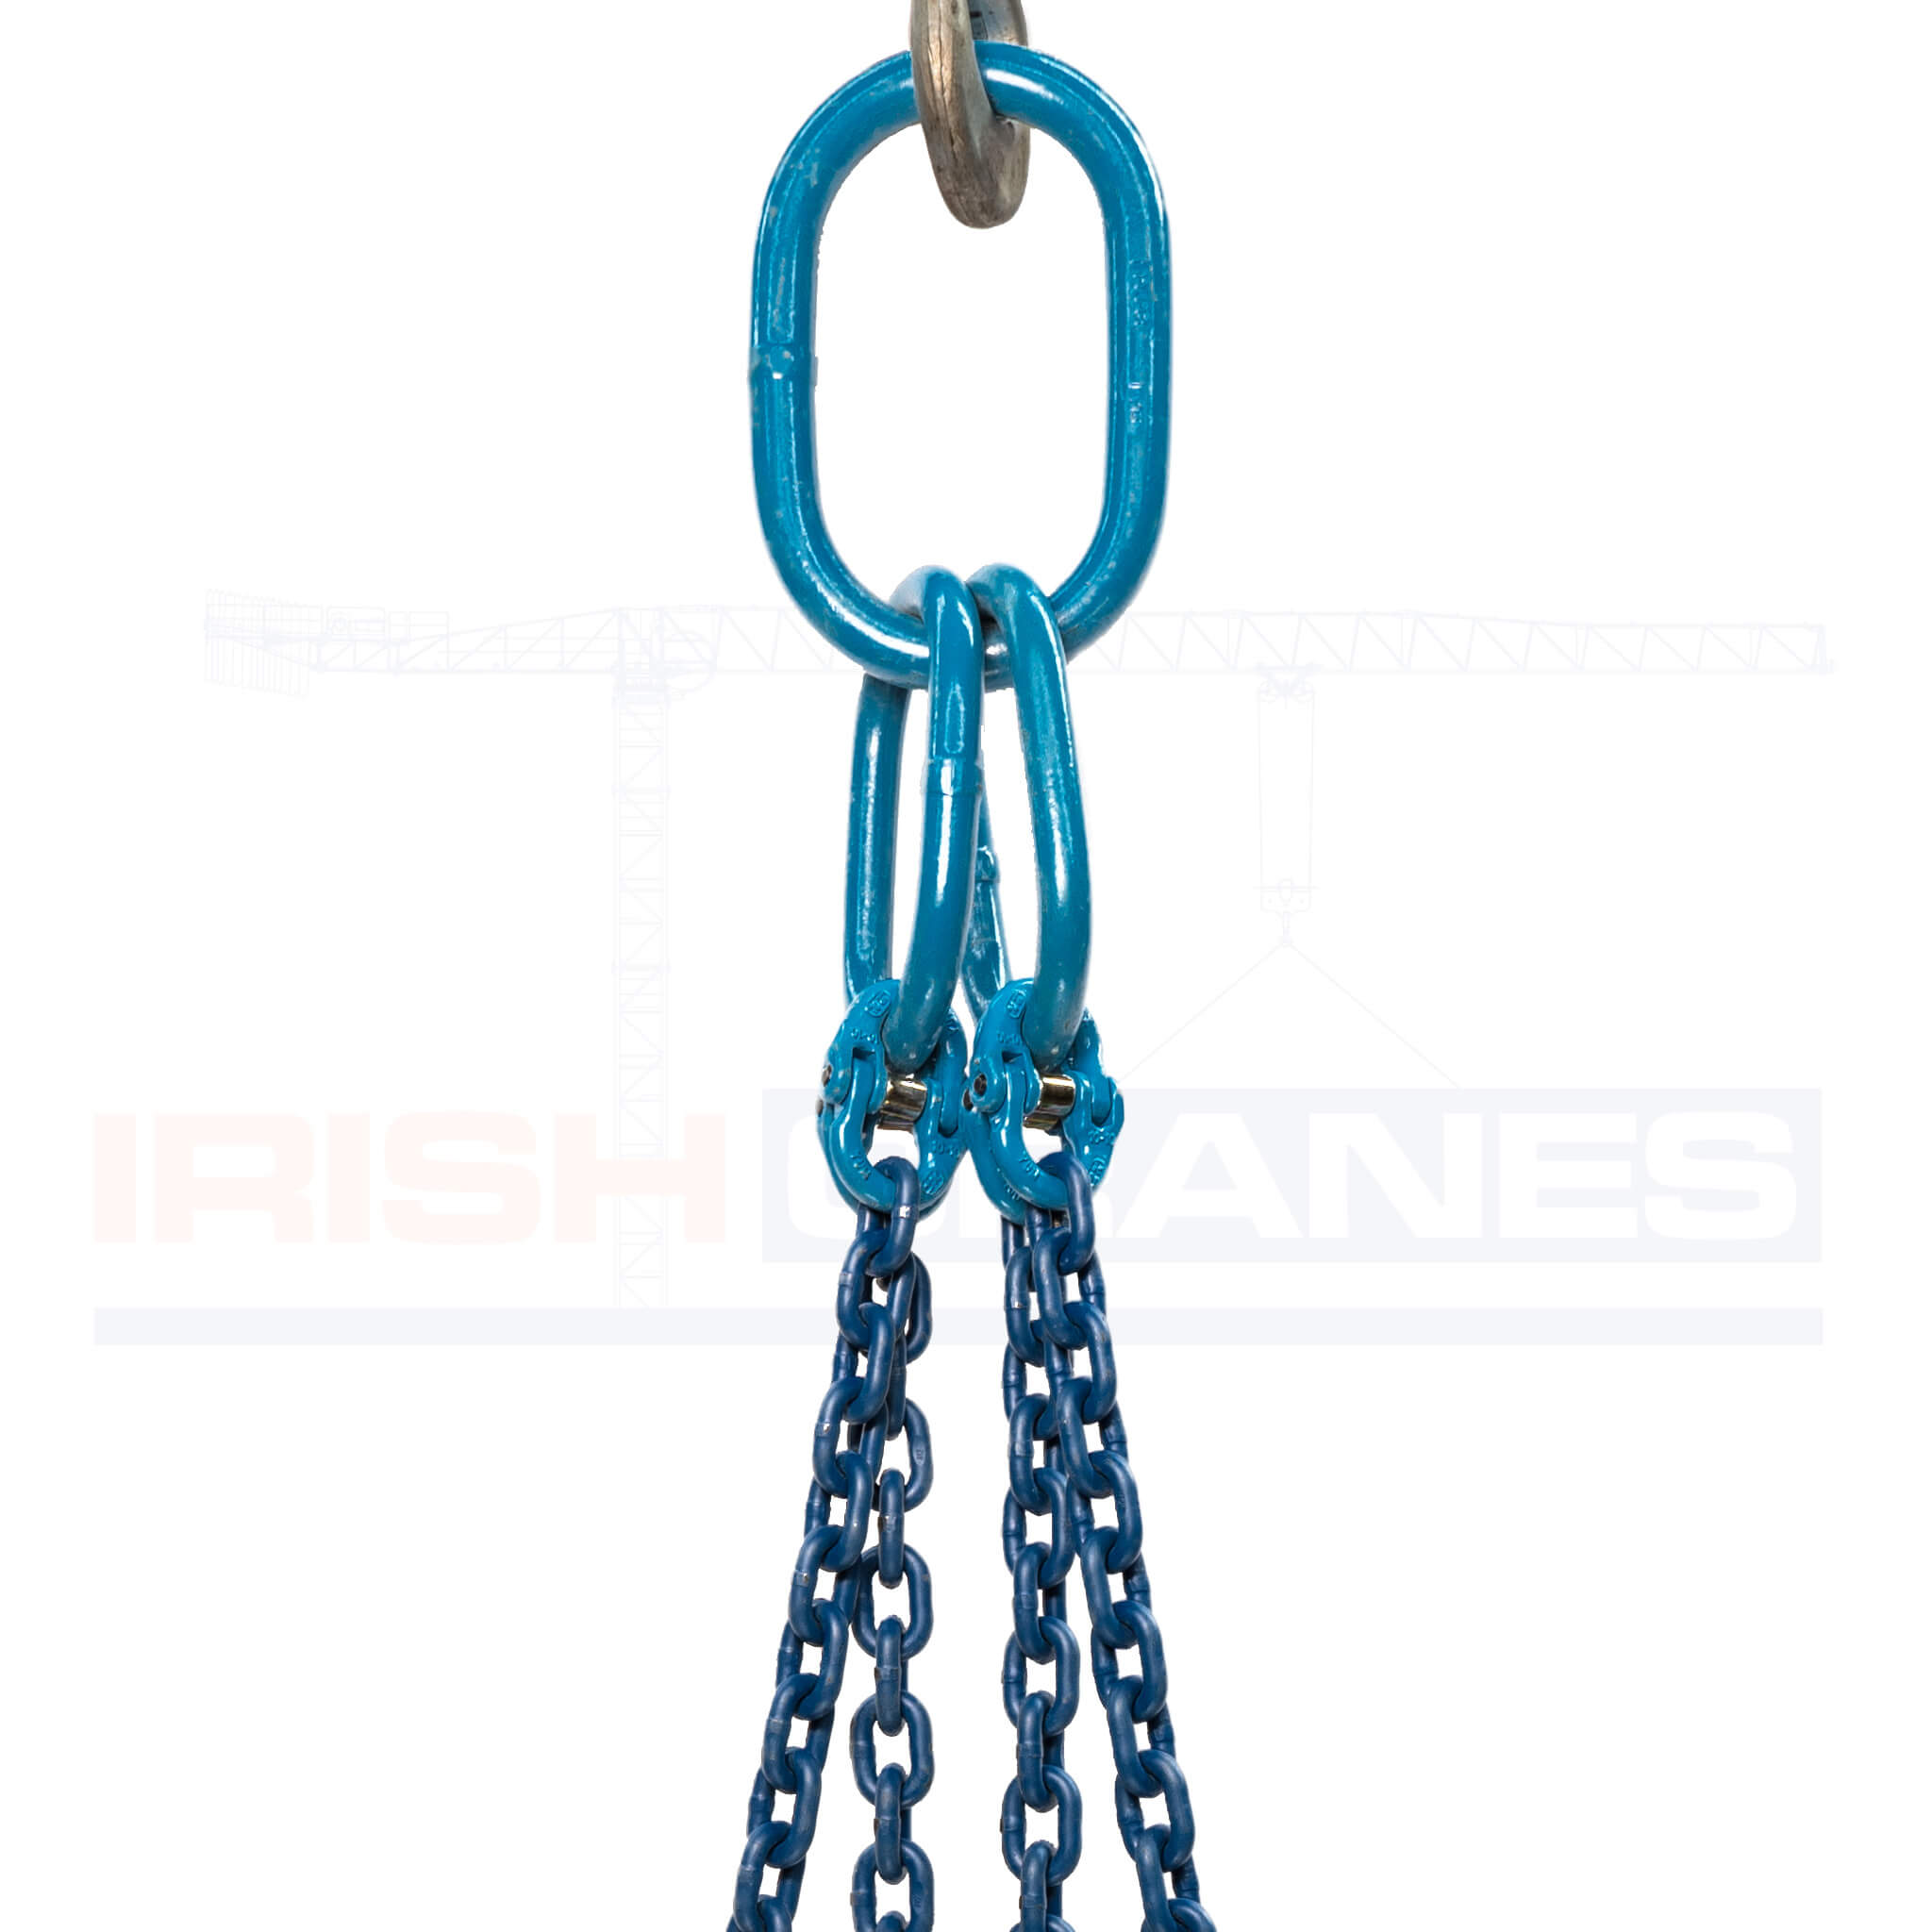 4 Leg Chain – Lifting Chain Sling loop